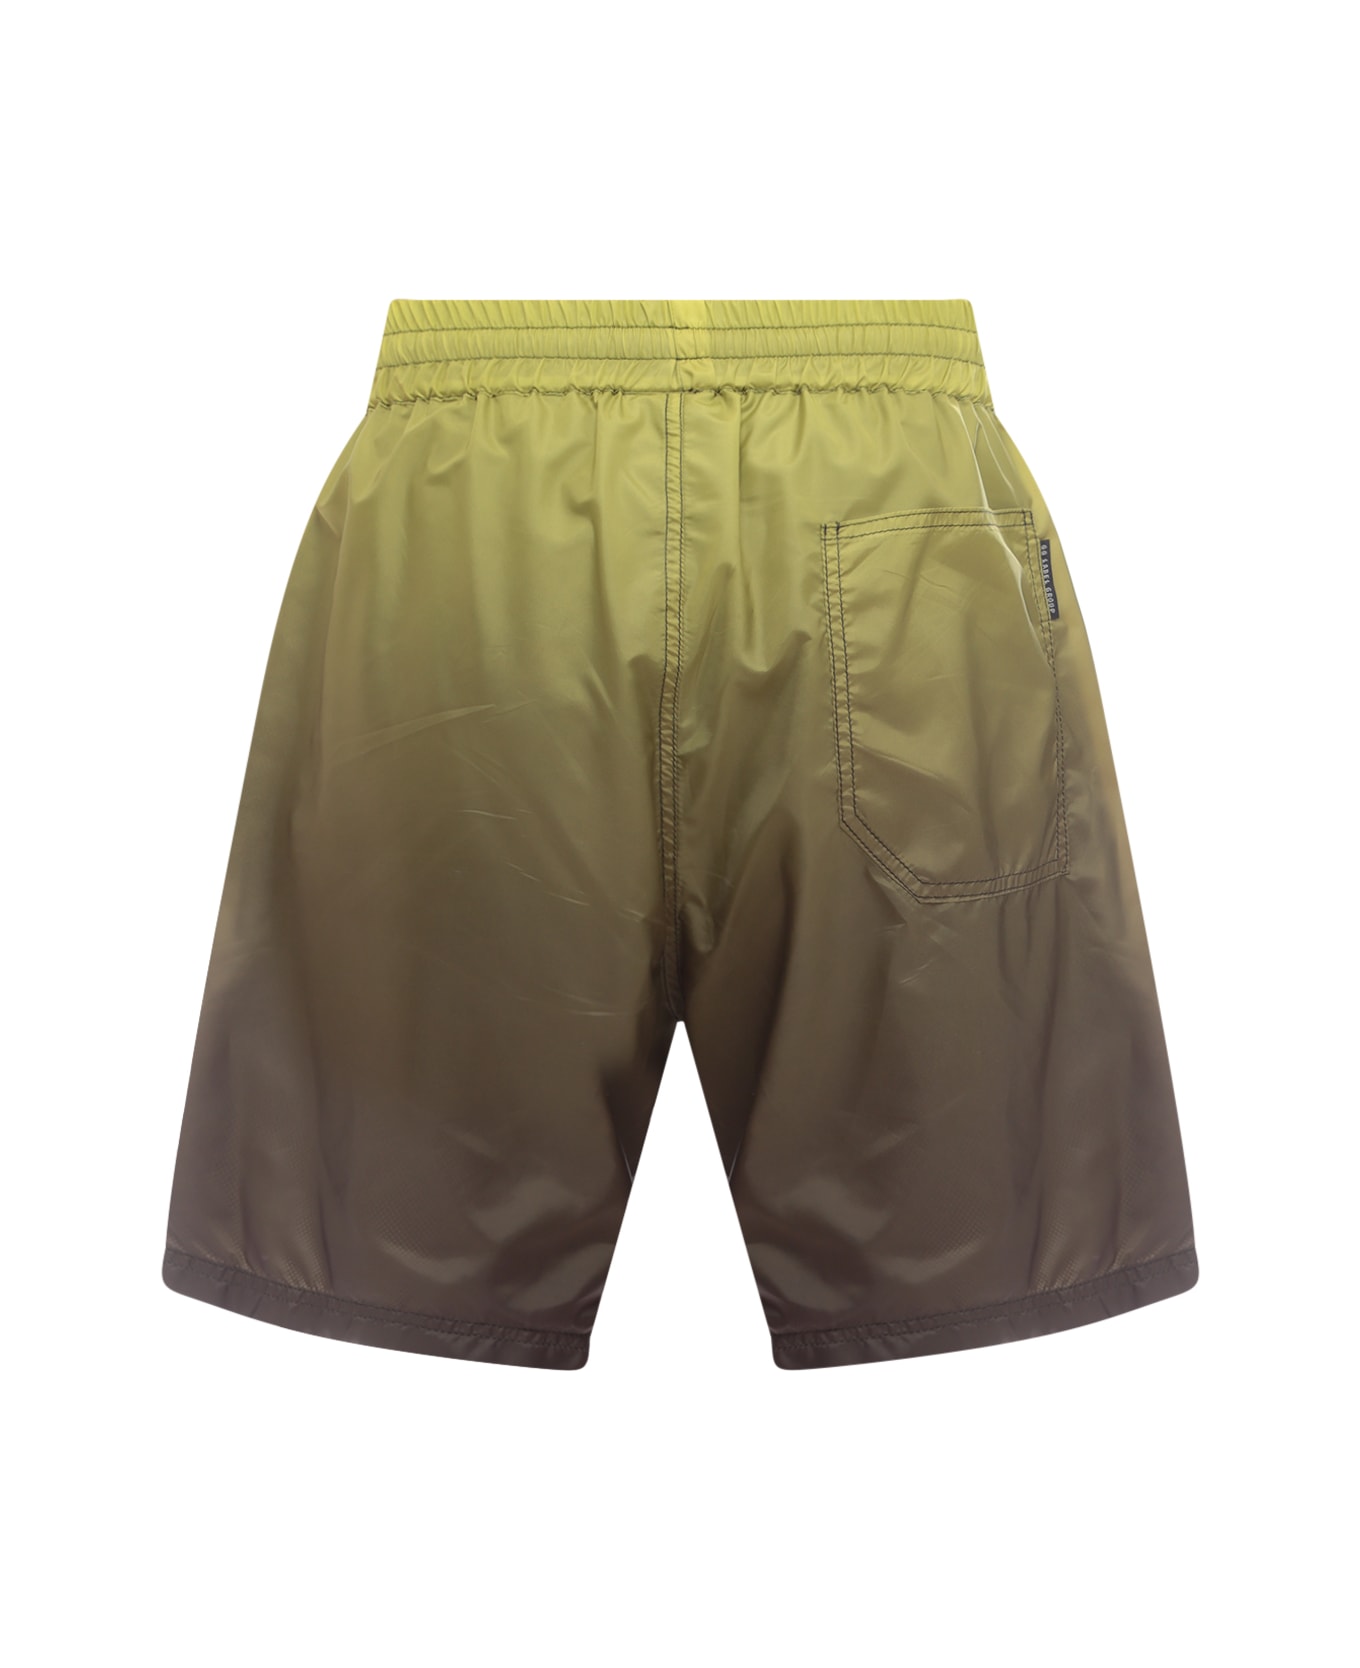 44 Label Group Bermuda Shorts - Green